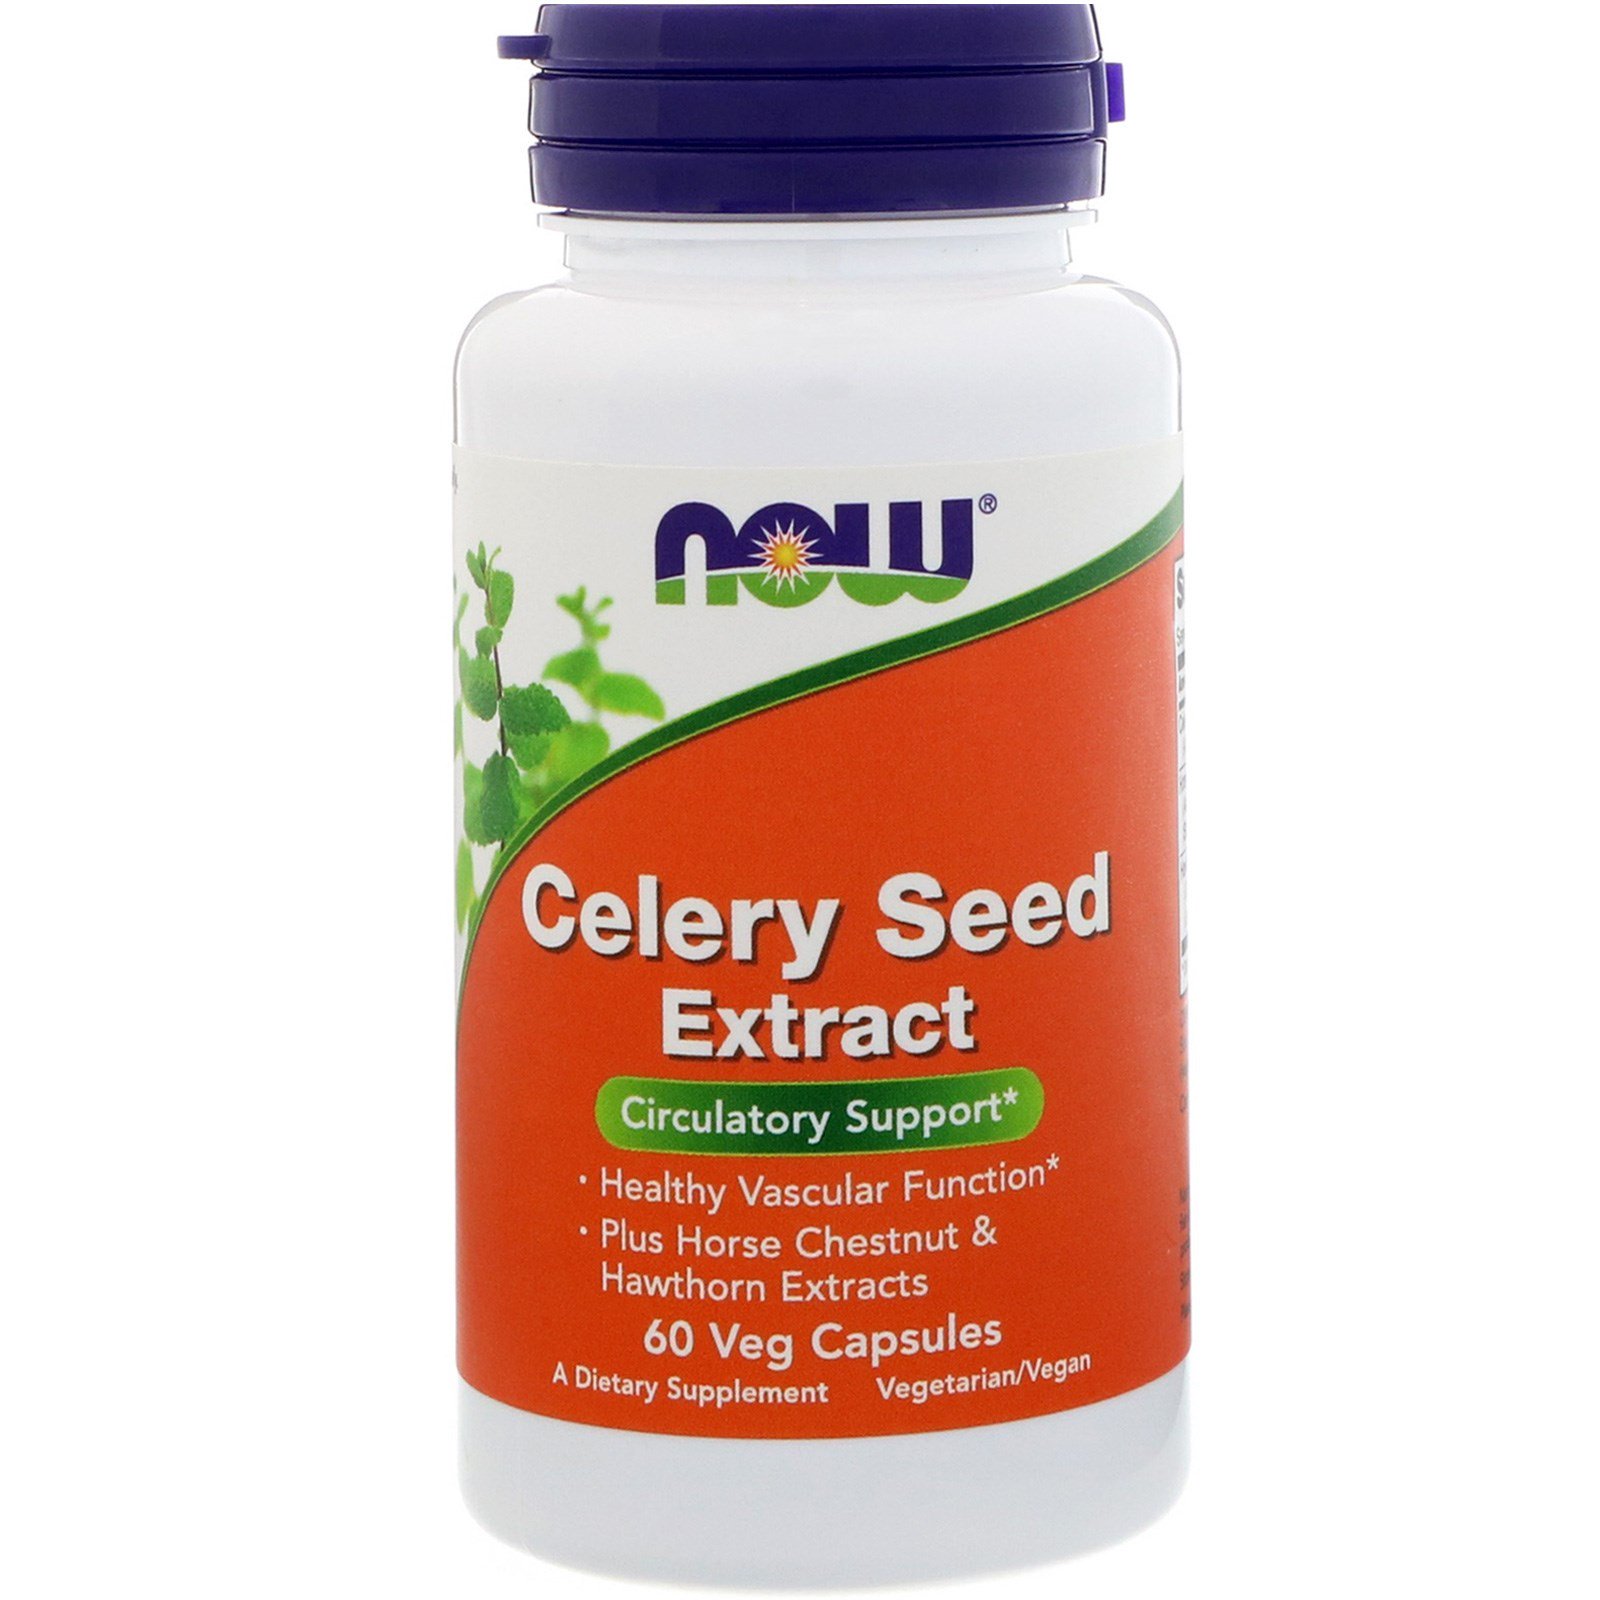 Celery Seed, Семяна Сельдерея Экстракт - 60 капсул